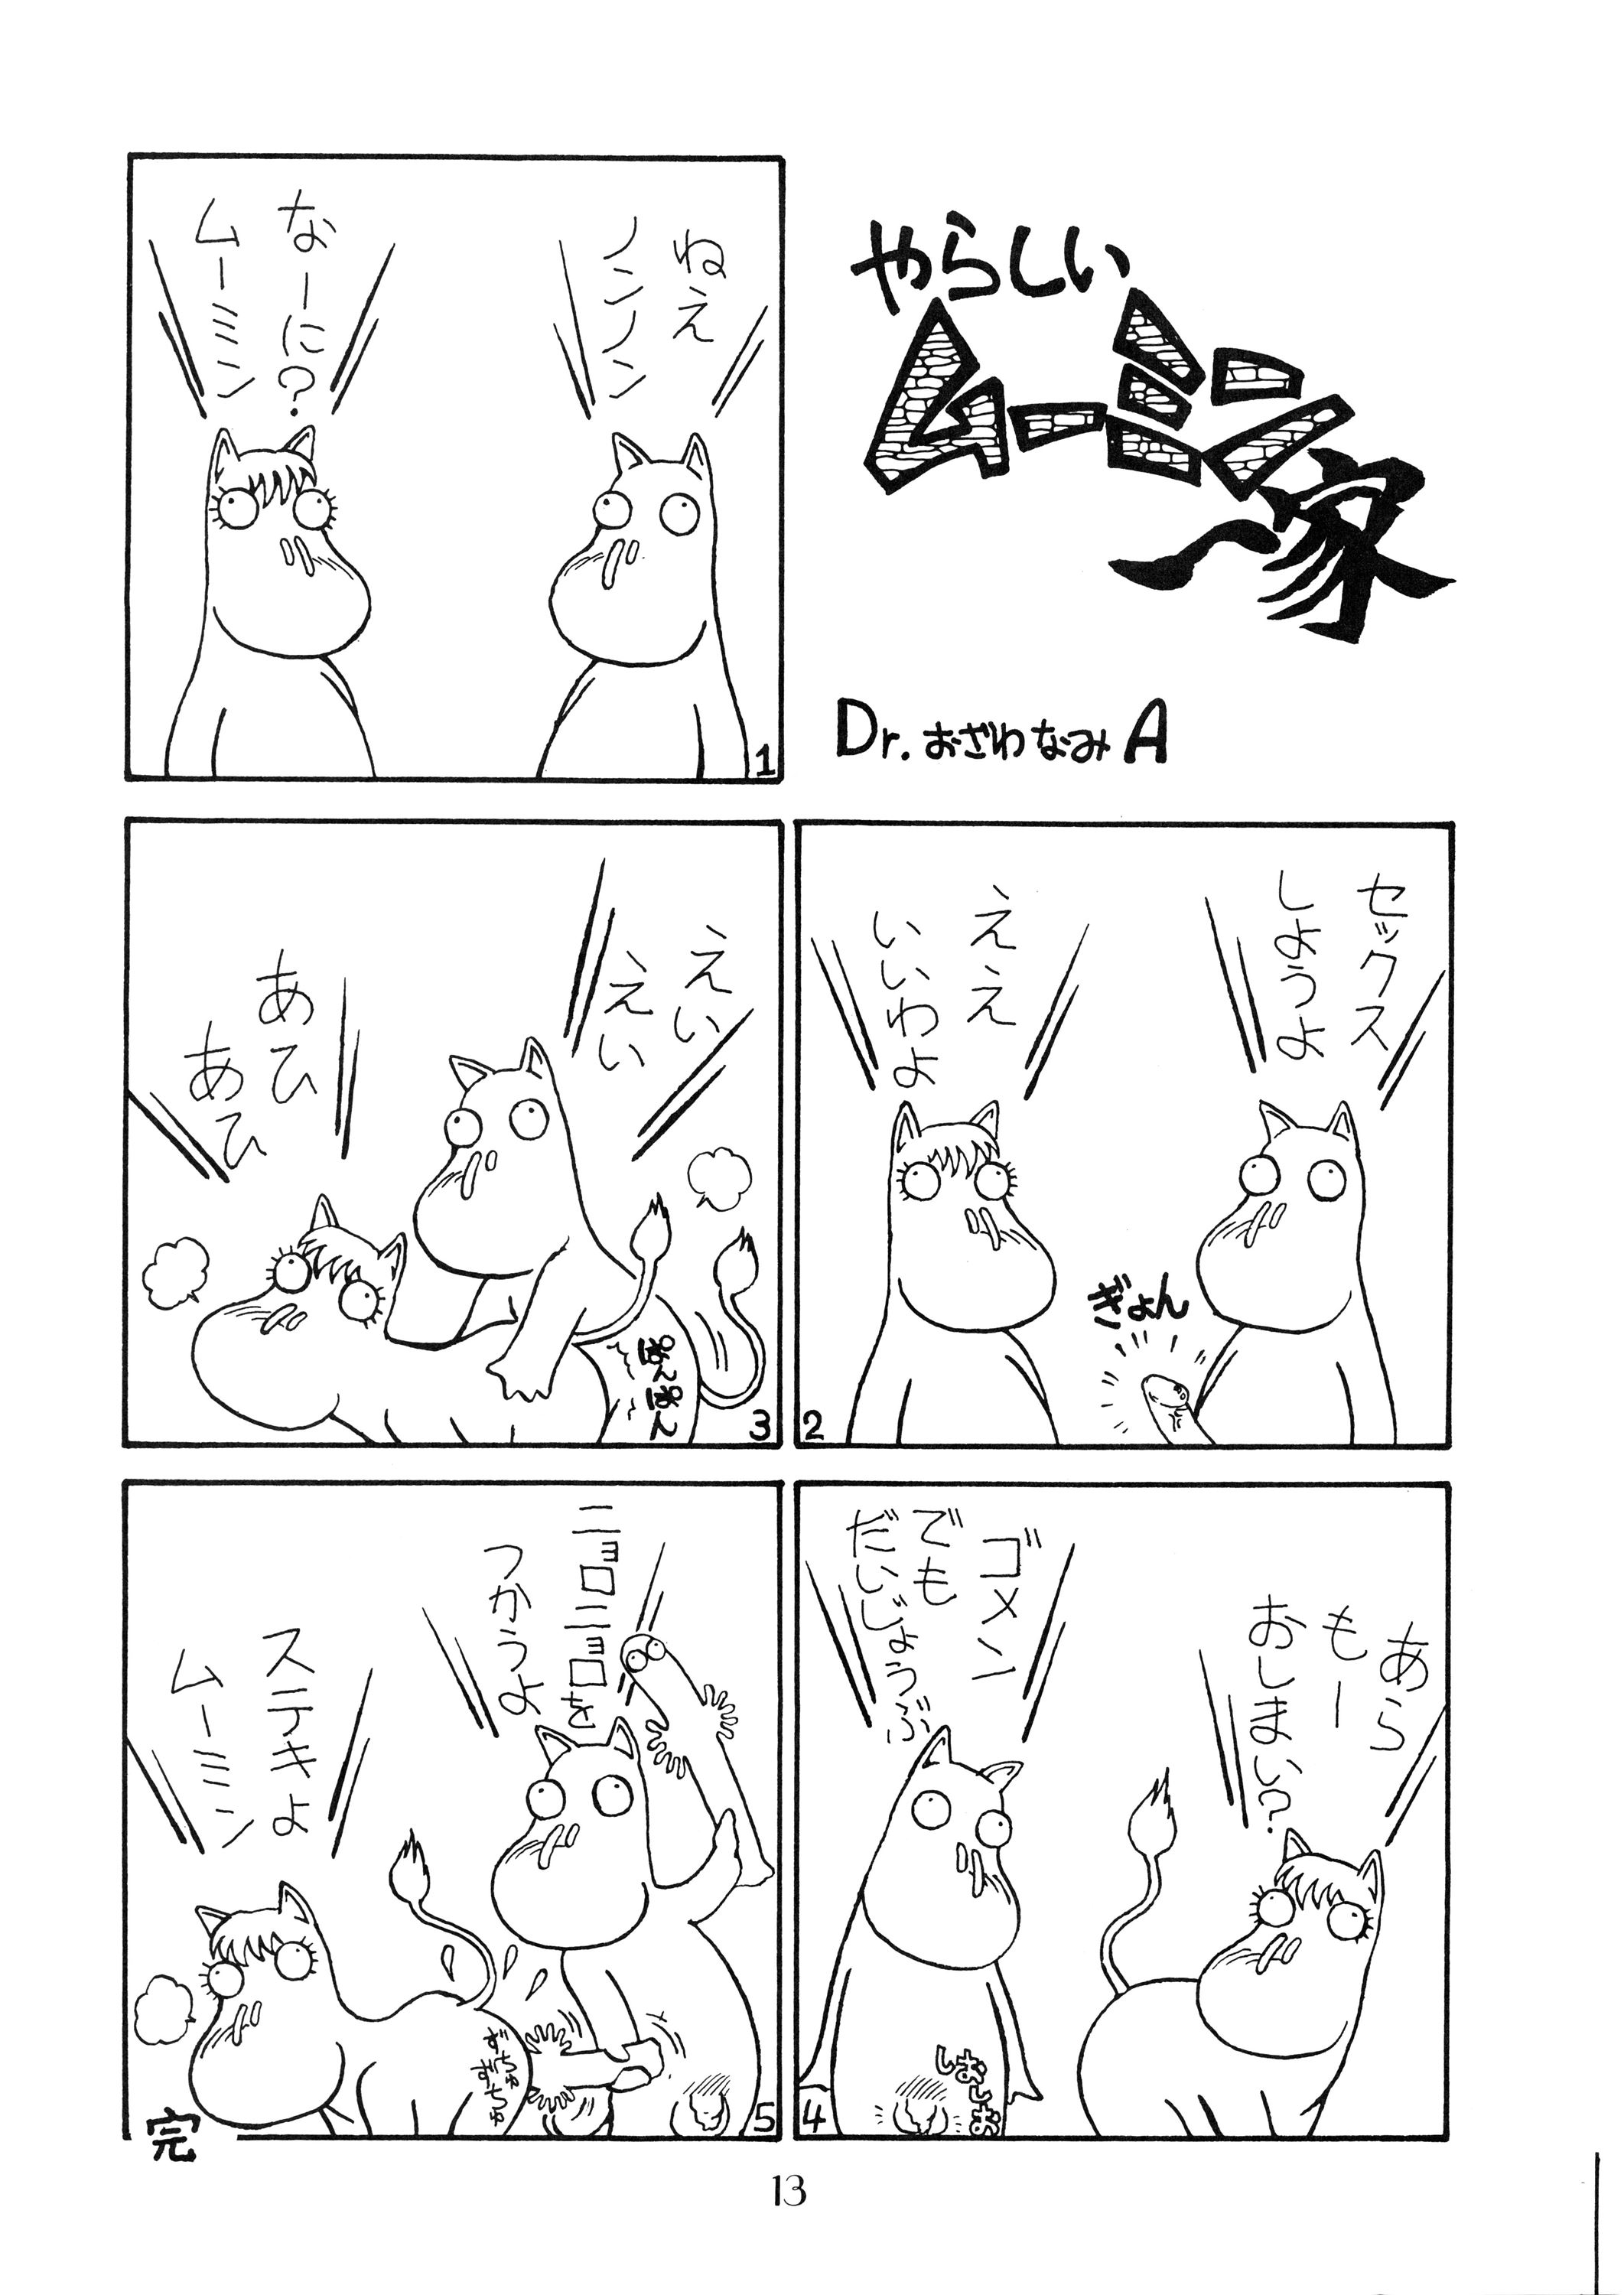 (C38) [PUSSY･CAT (よろず)] PUSSY･CAT Vol.18 ナディア奥本 (よろず)